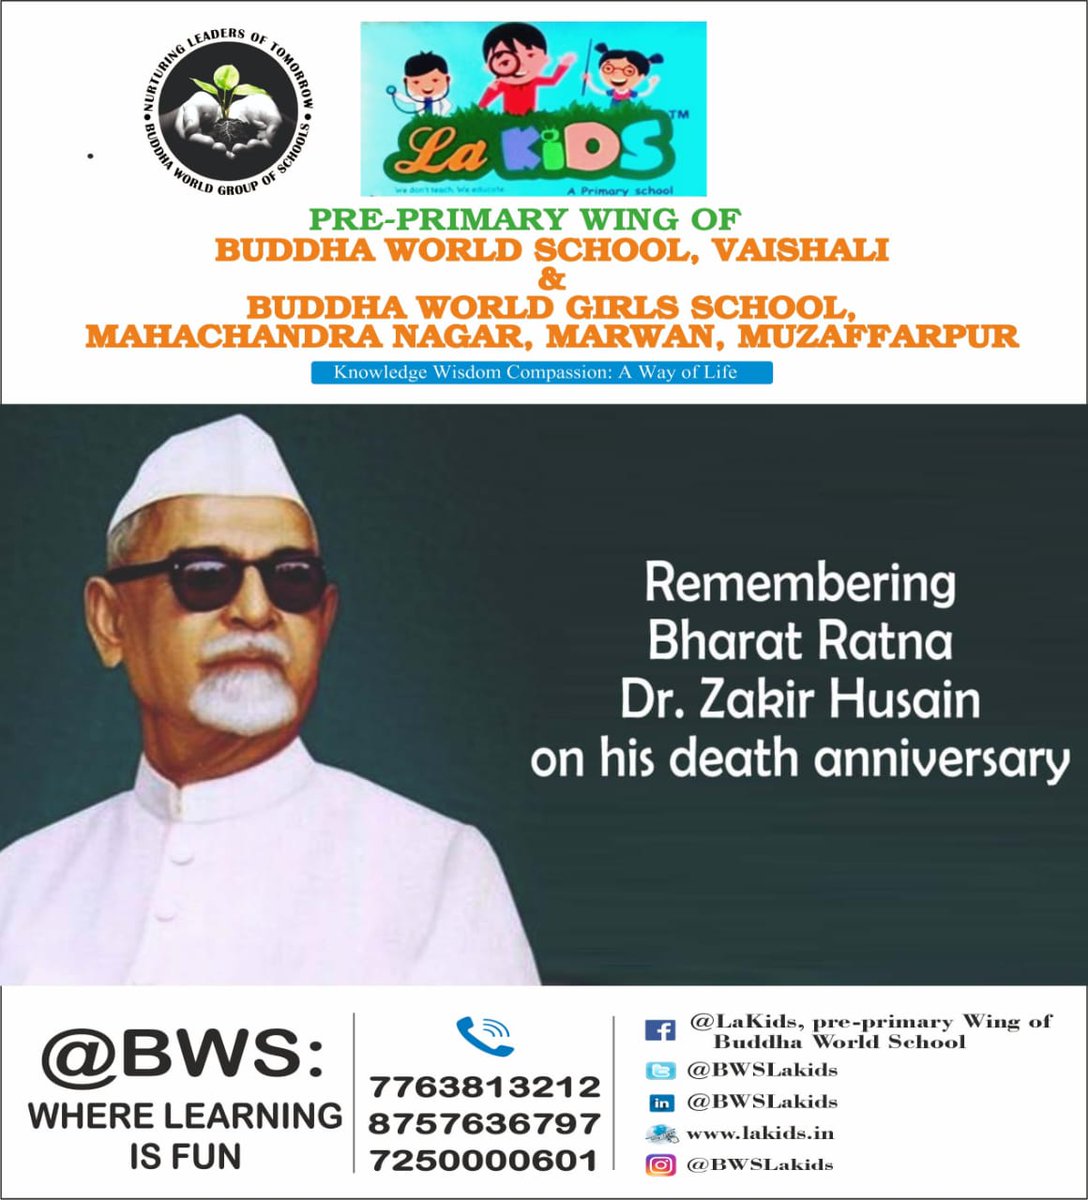 Remembering Bharat Ratna Dr. Zakir Husain on his death anniversary. #zakirhusain #drzakirhusain #bharatratna #president #bws #wherelearningisfun @sarikamalhotra2 @Krish_Vaishali